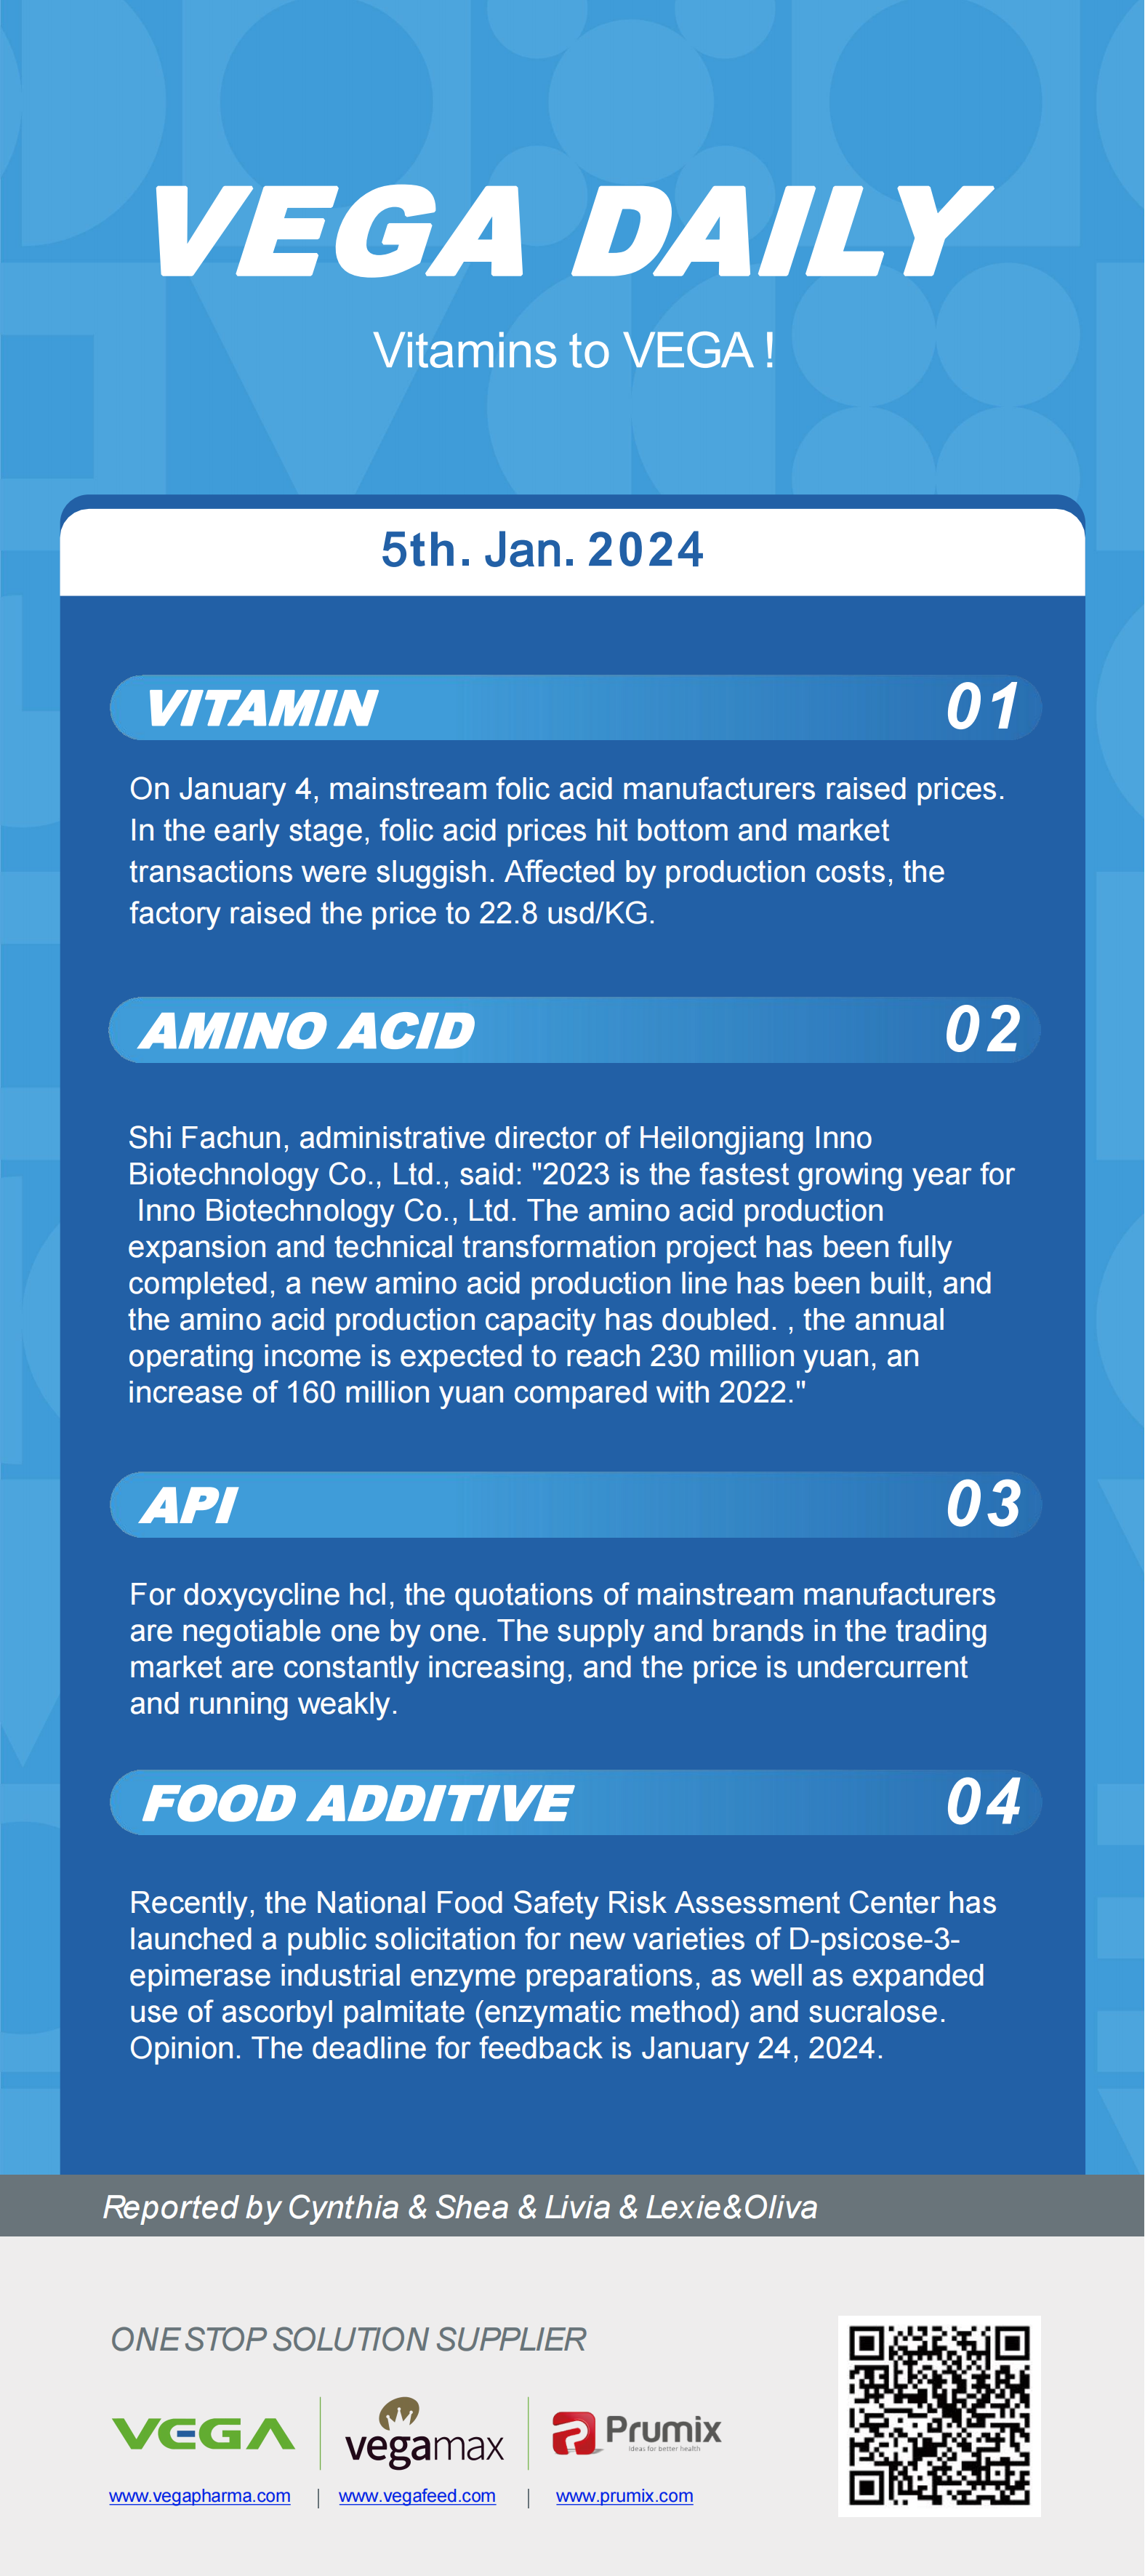 Vega Daily Dated on Jan 5th 2024 Vitamin Amino Acid APl Food Additives.png